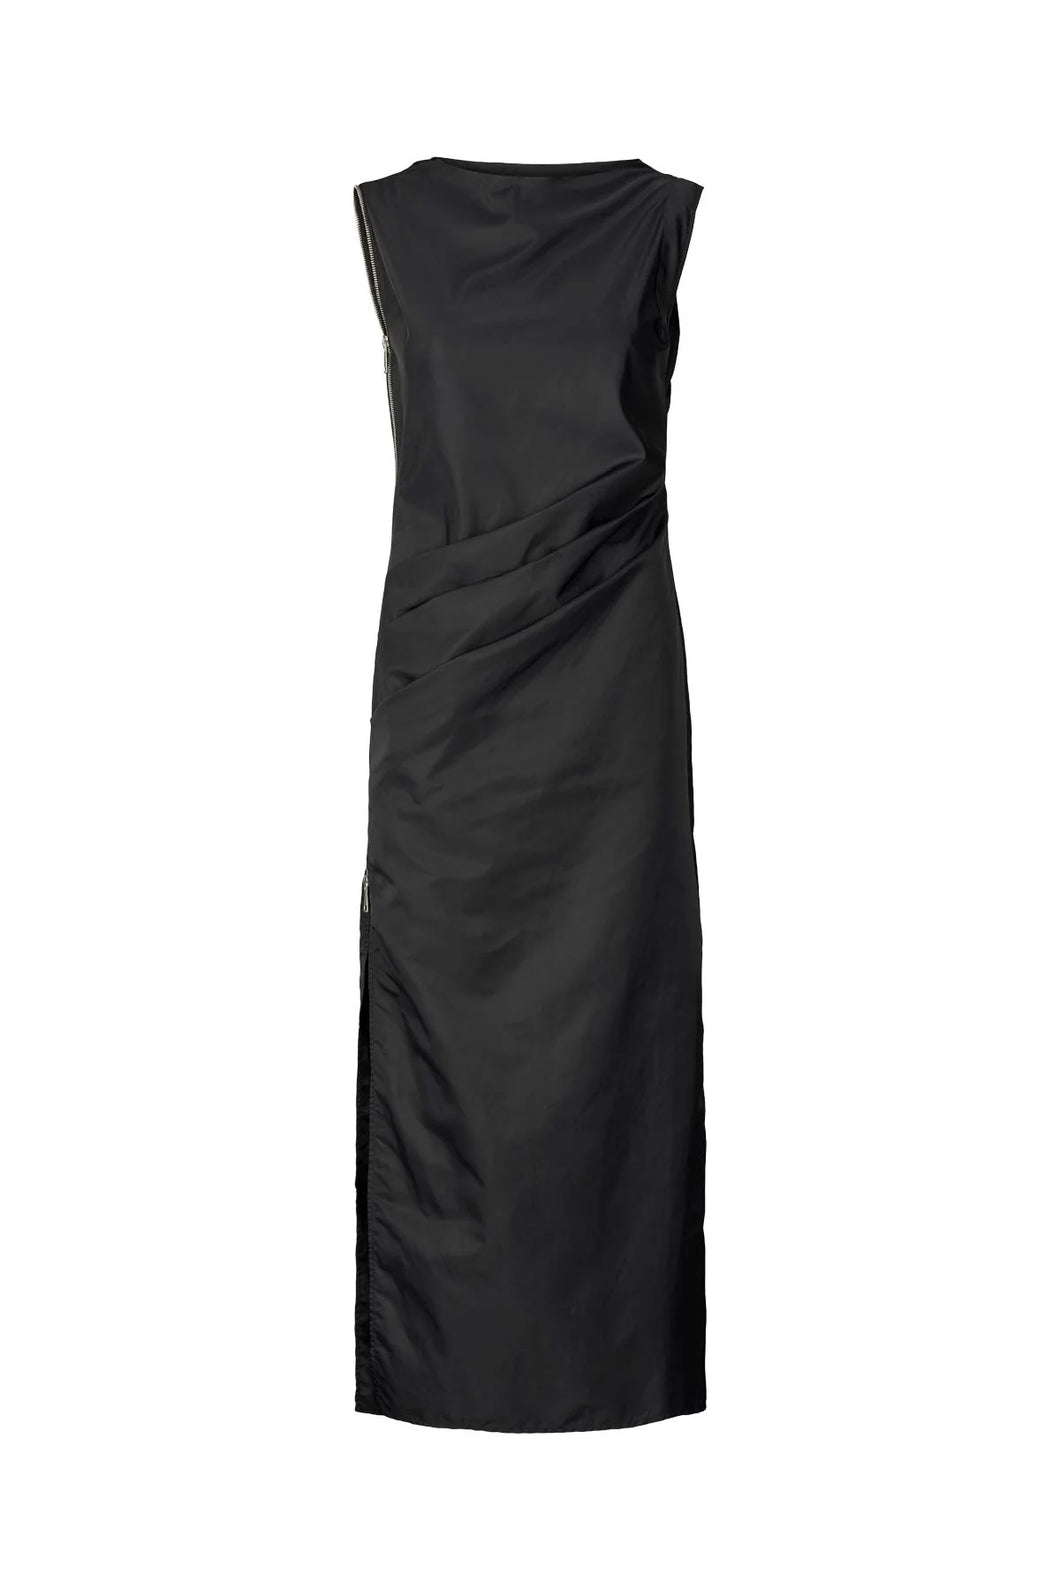 Rabens Saloner Alita Nylon Zipper Dress Caviar Black W24108103